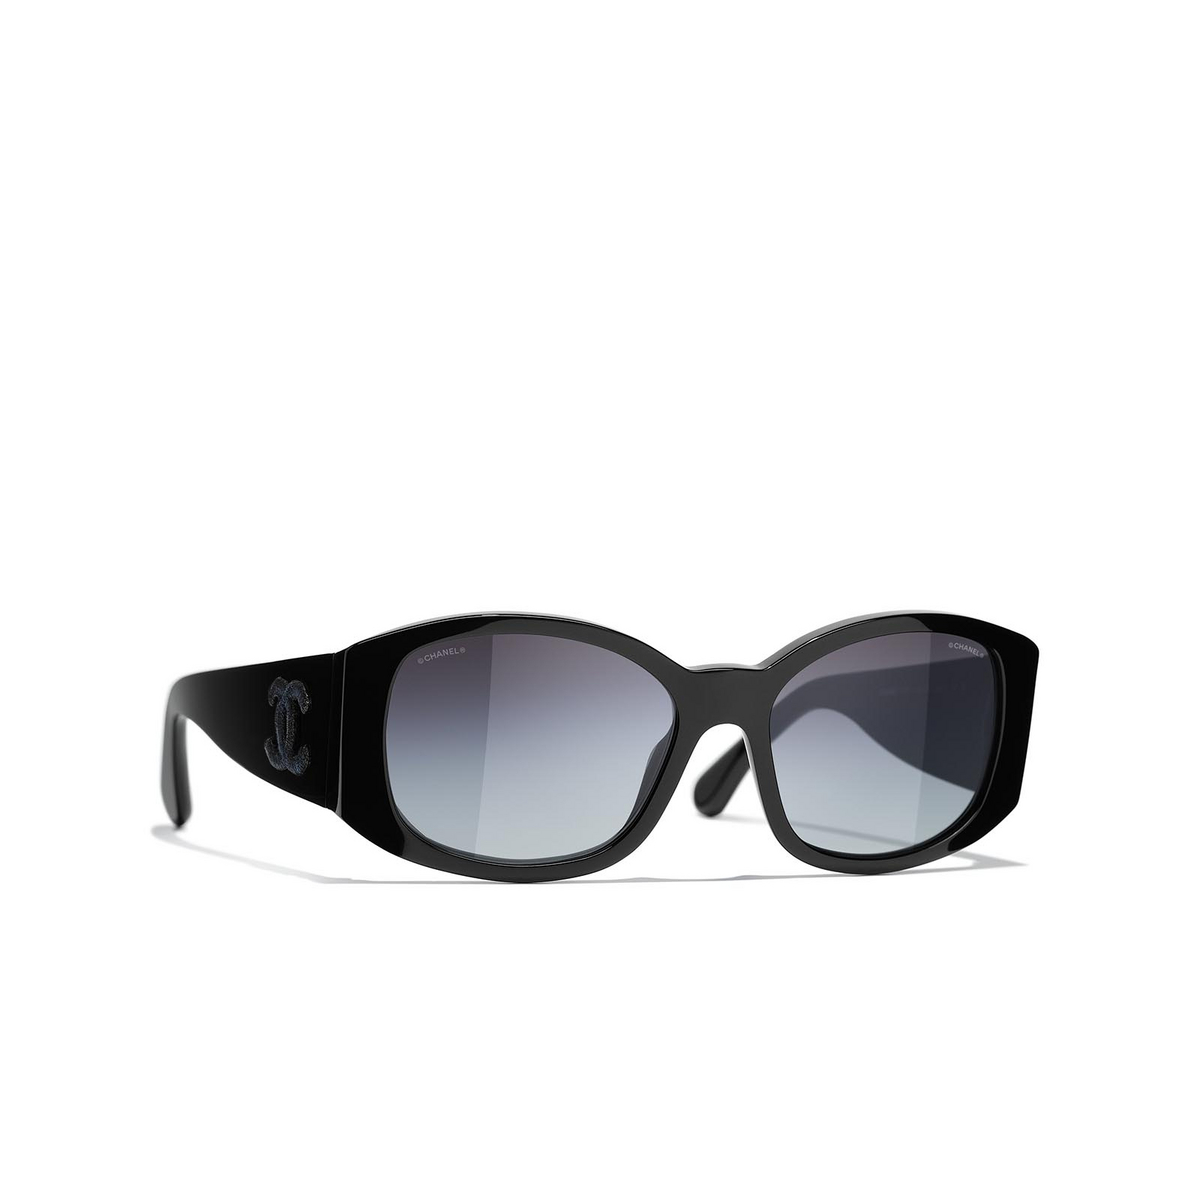 CHANEL oval Sunglasses C501S6 Black - three-quarters view